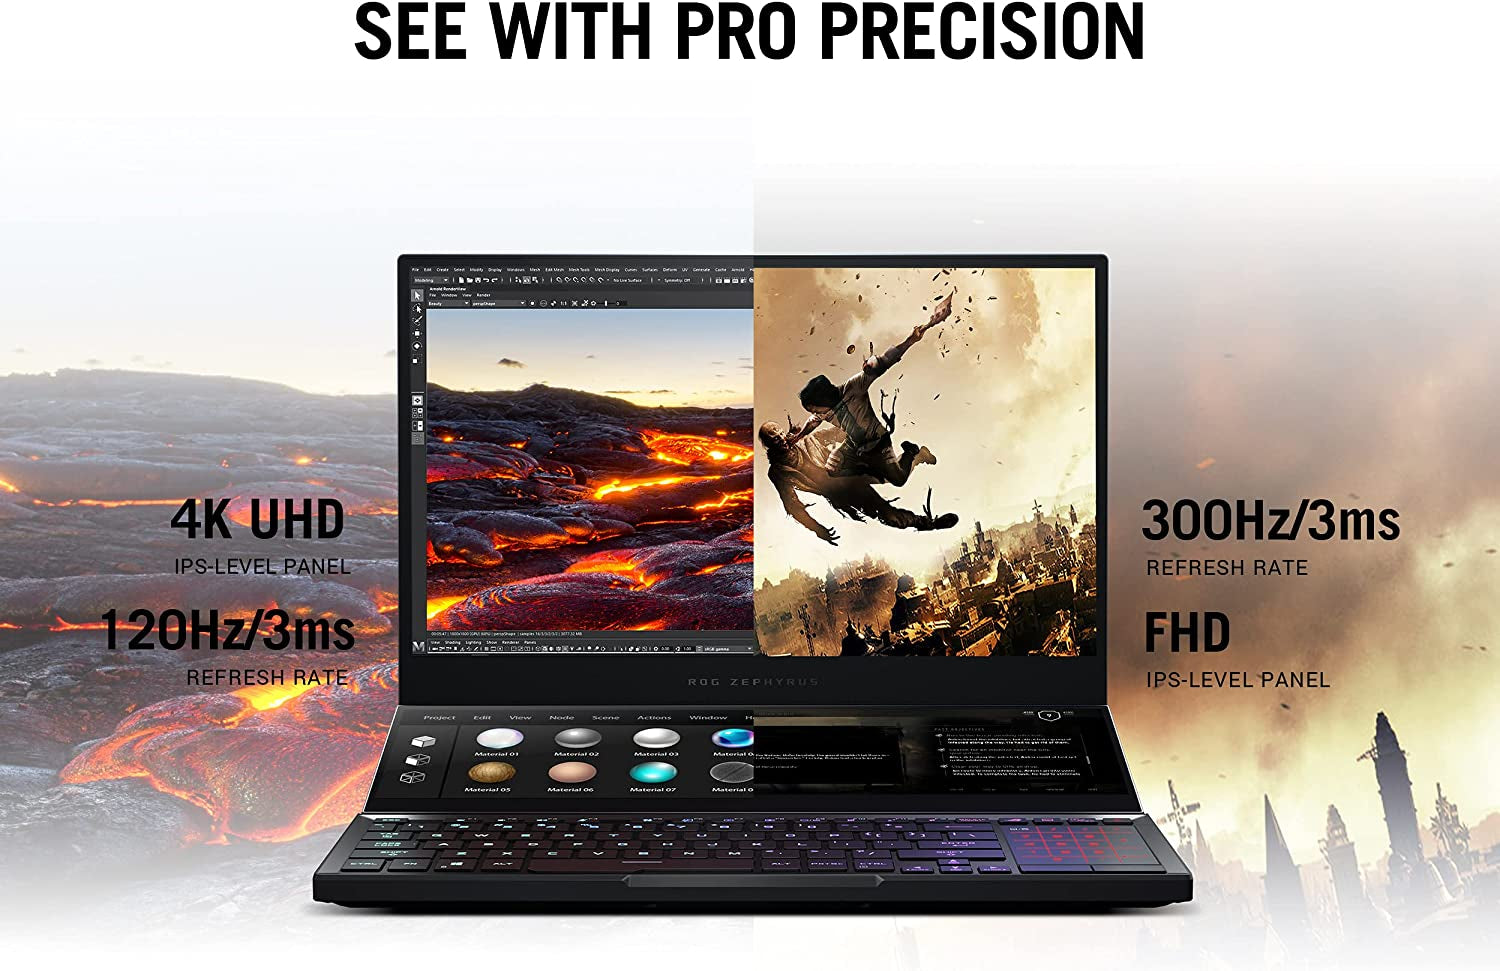 ROG Zephyrus Duo SE 15 Gaming Laptop, 15.6” 300Hz IPS Type FHD Display, NVIDIA Geforce RTX 3060, AMD Ryzen 9 5980HX, 16GB DDR4, 1TB Pcie SSD, Per-Key RGB Keyboard, Windows 10 Home, GX551QM-ES96